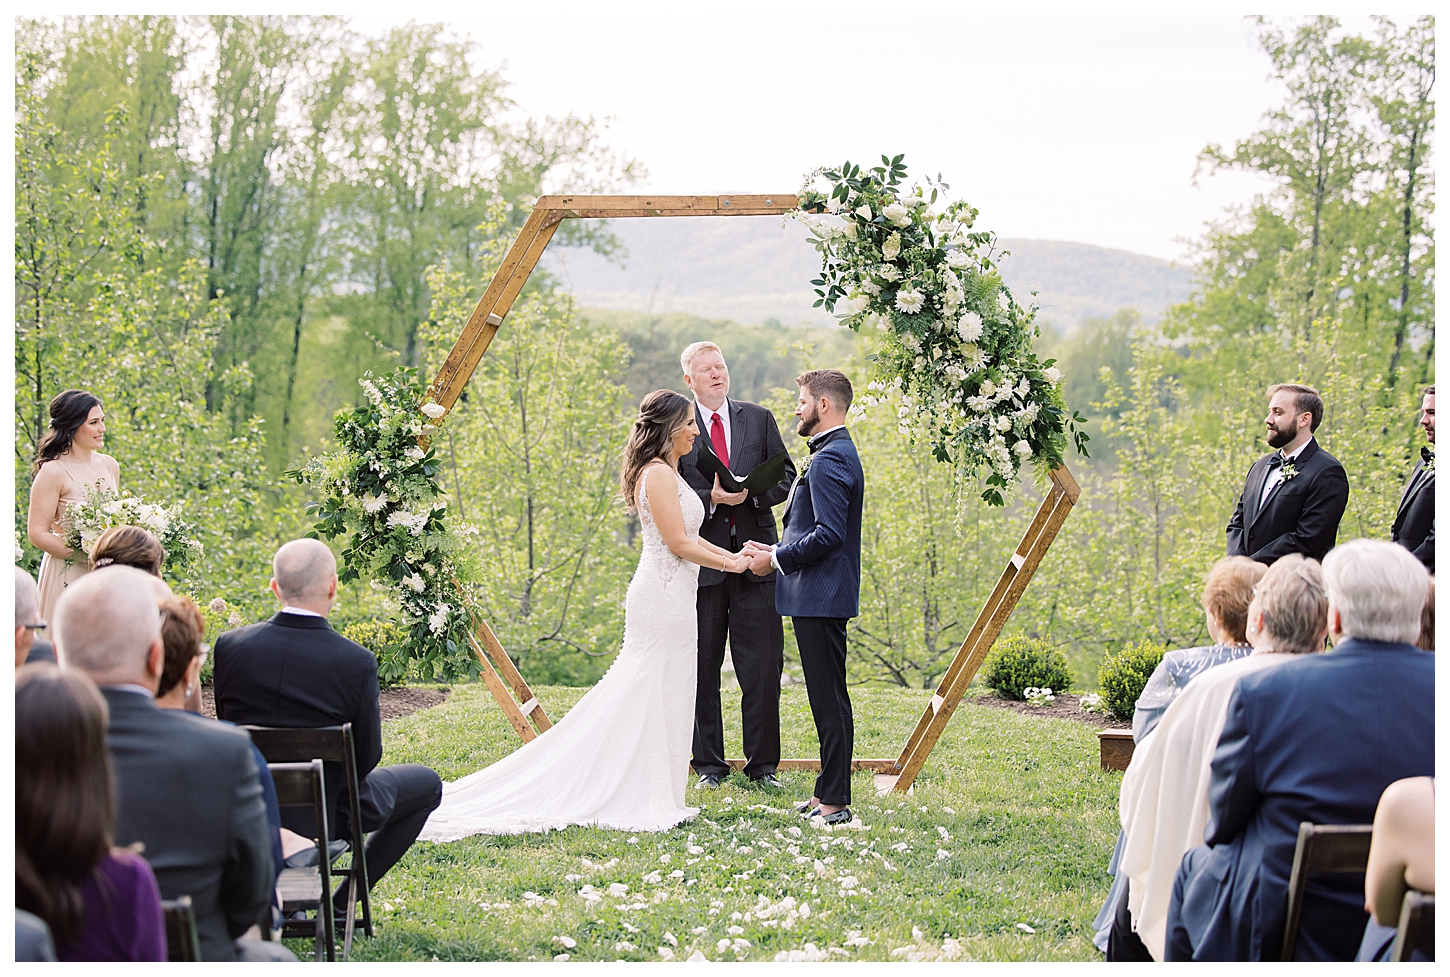 Eastwood Farm and Winery Wedding Photographer